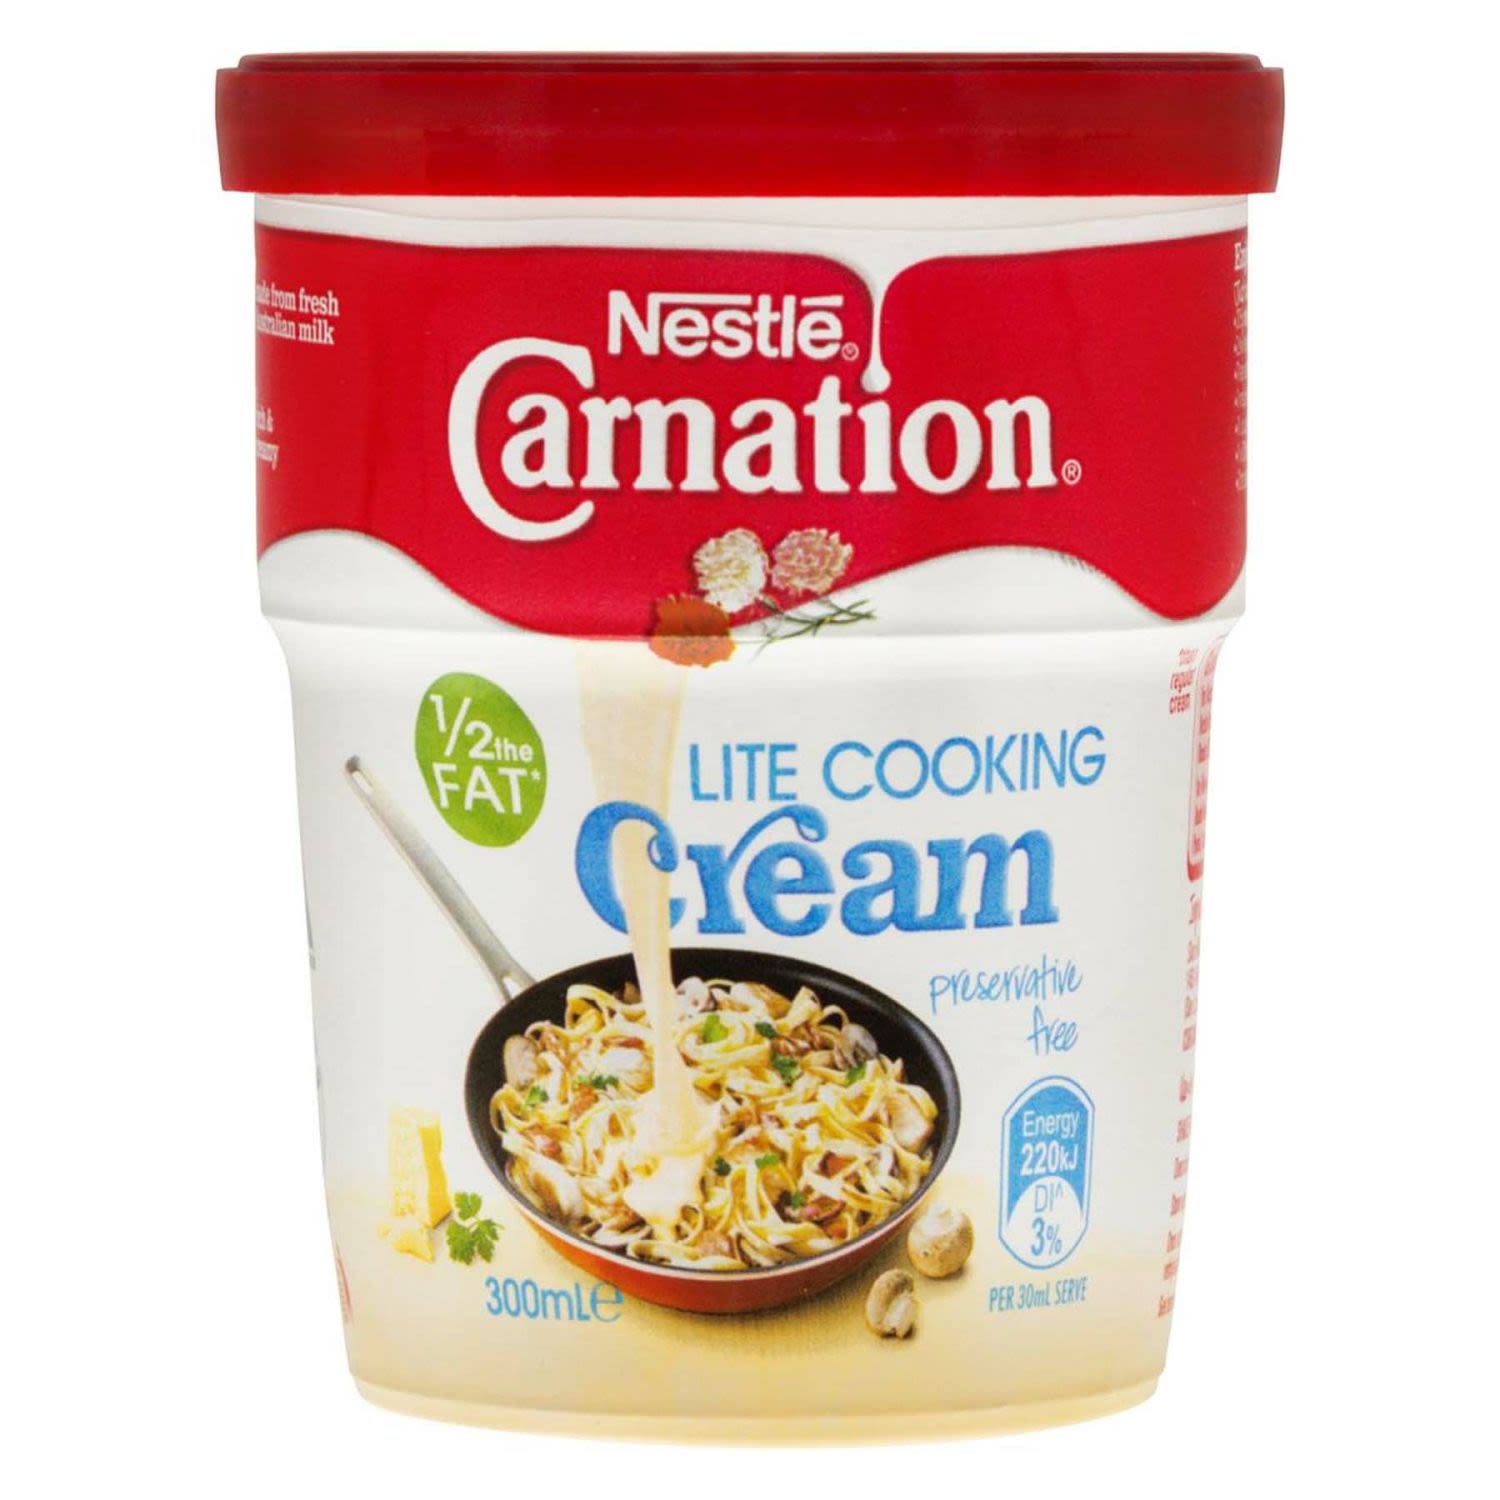 Nestlé Carnation Lite Cooking Cream, 300 Millilitre